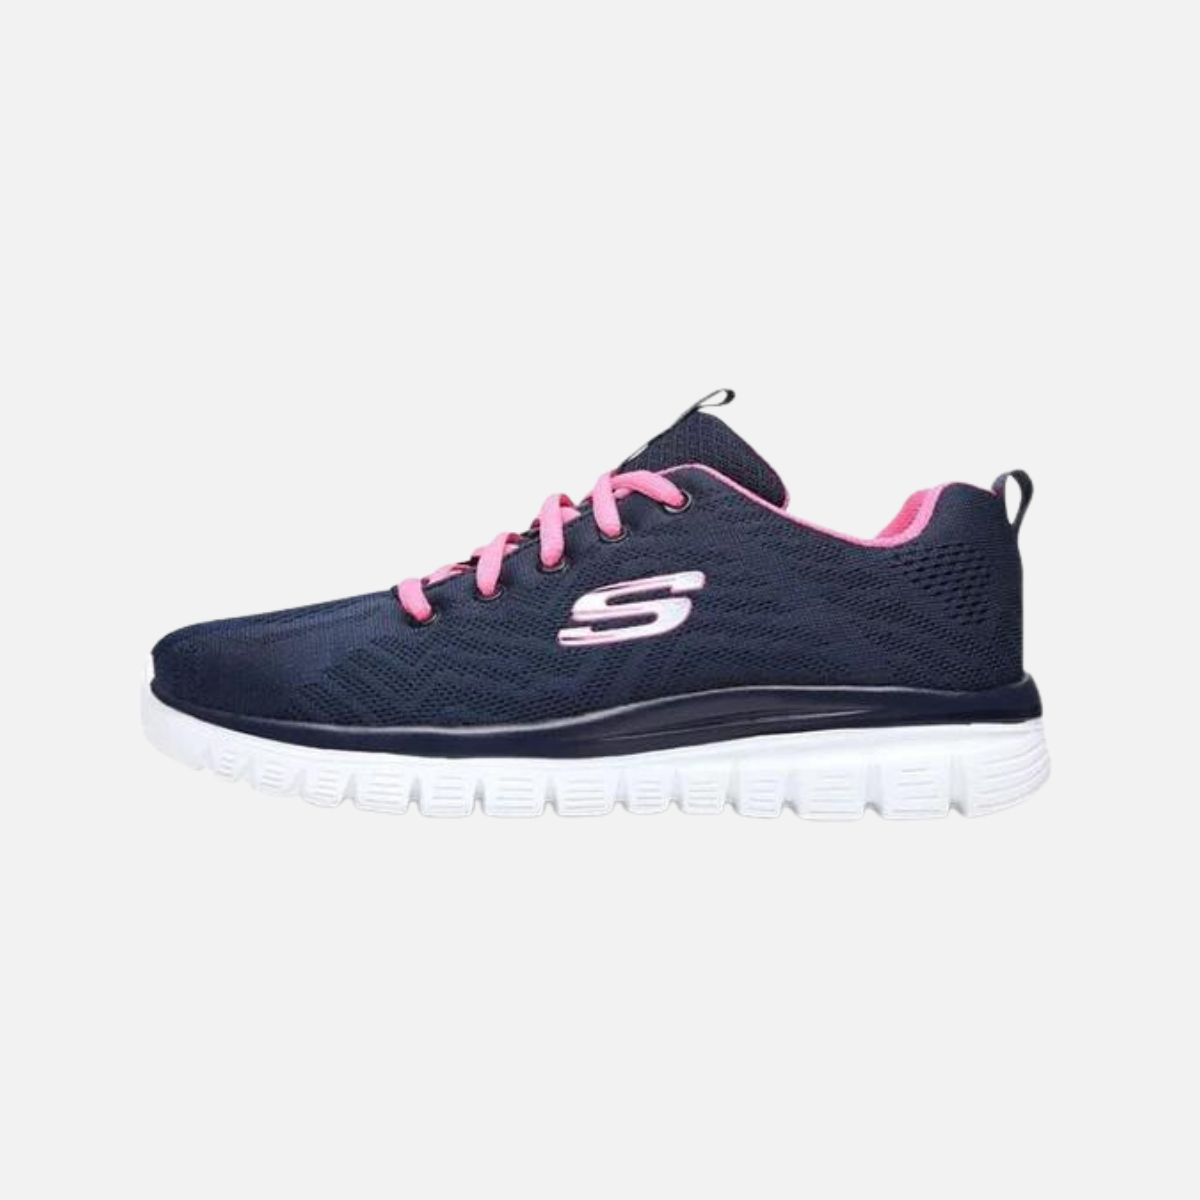 Skechers Graceful-Get Connected Women's Running Shoes -Navy/Hot pink